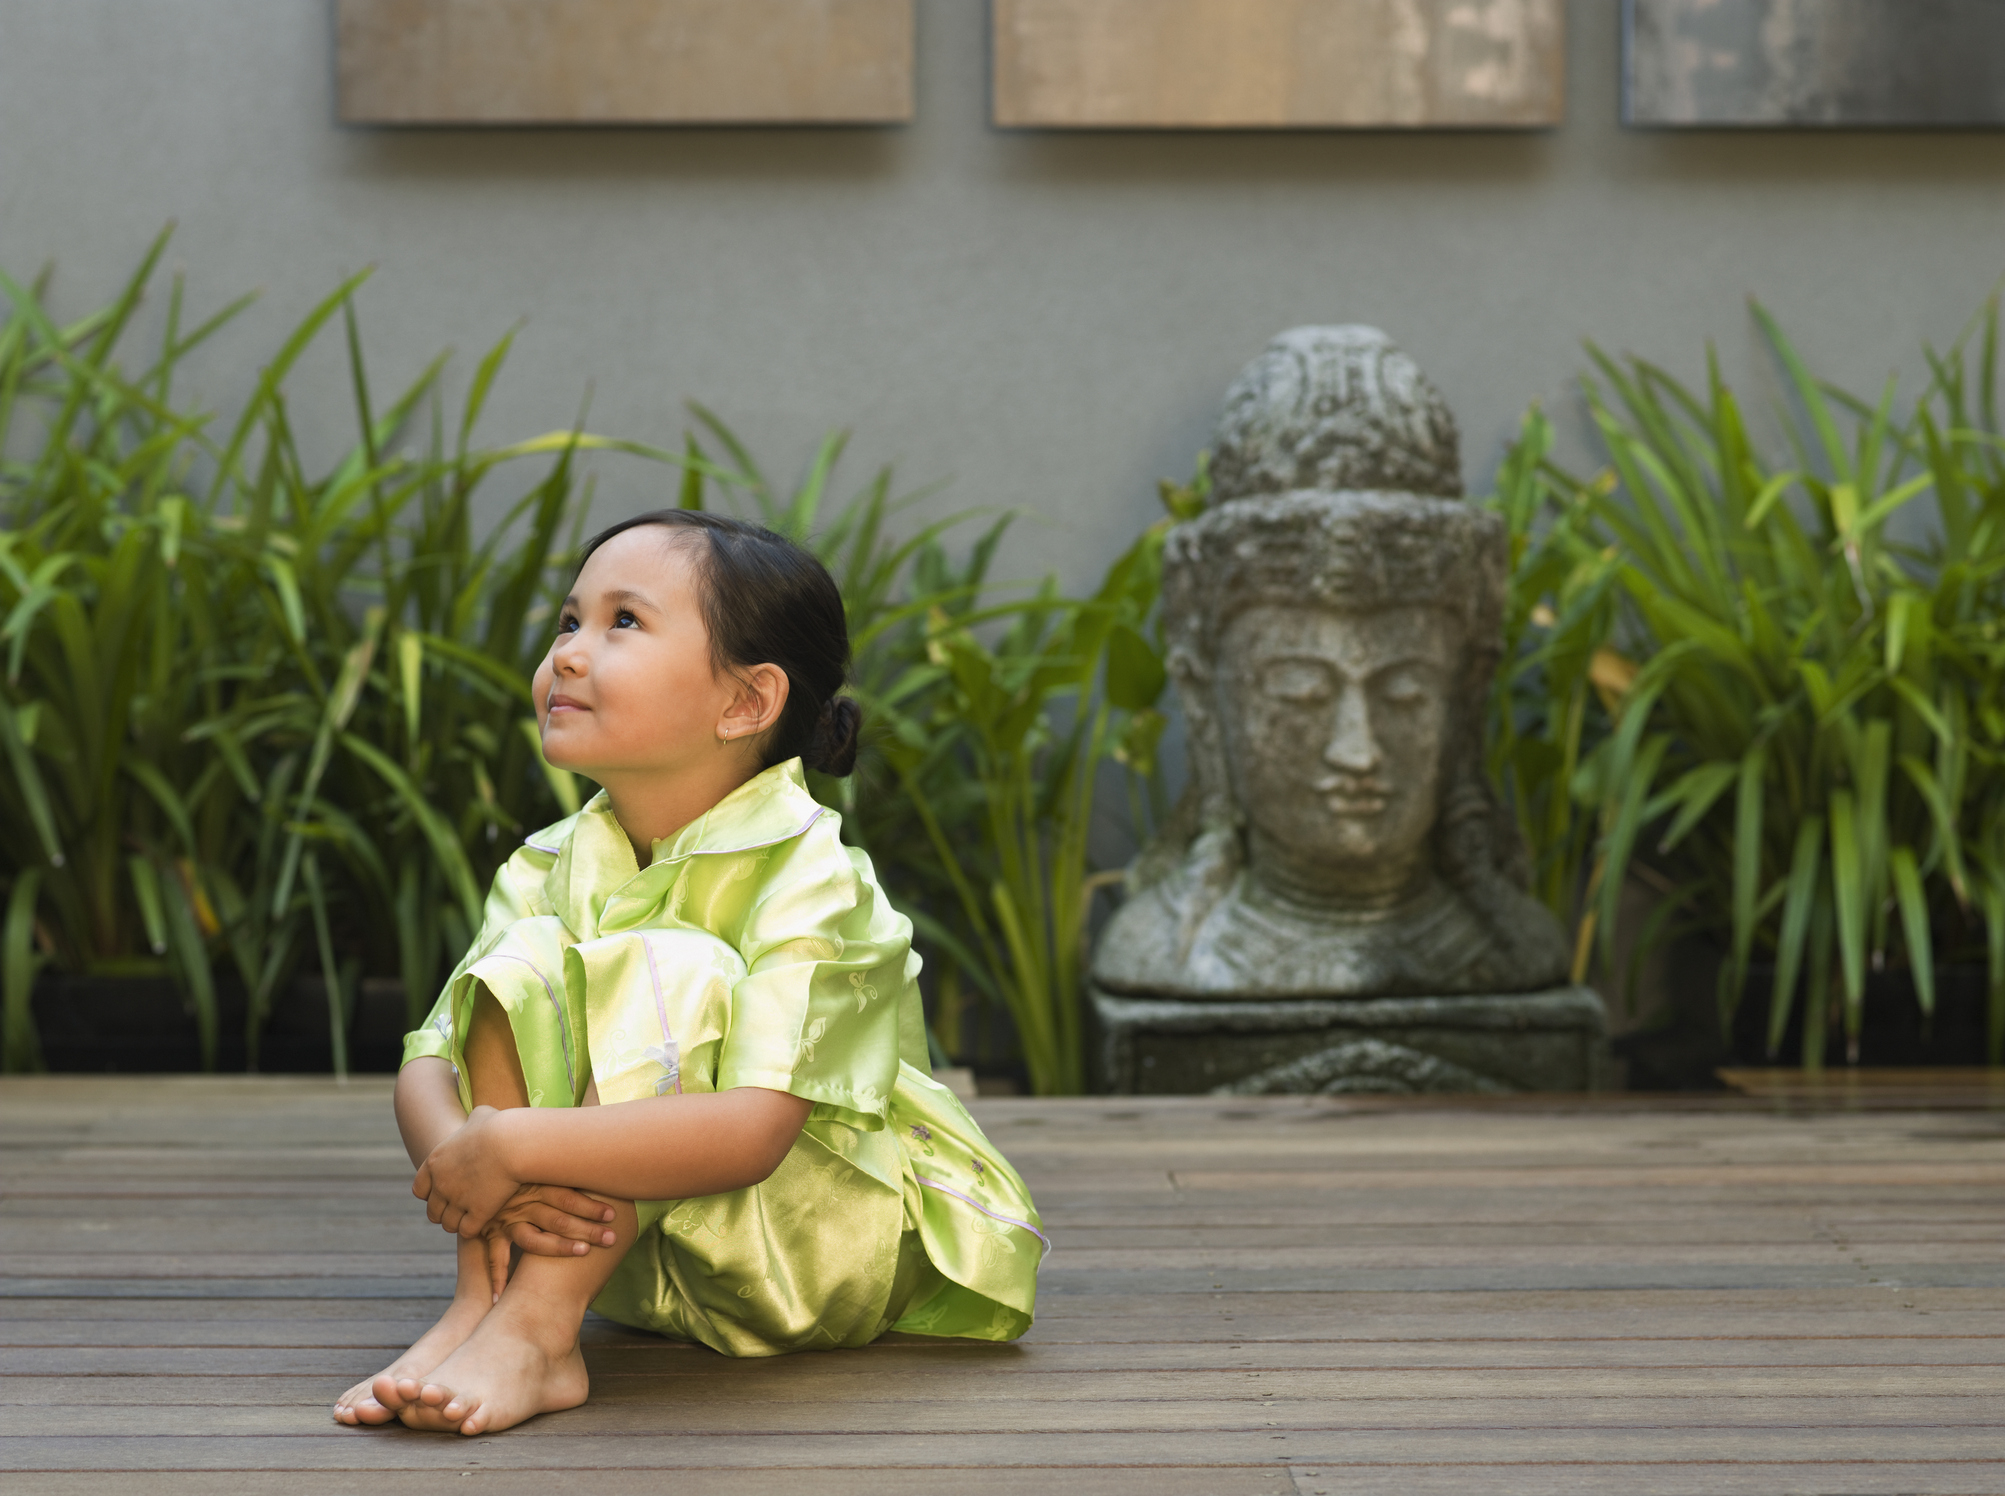 A little girl sitting on an outside deck